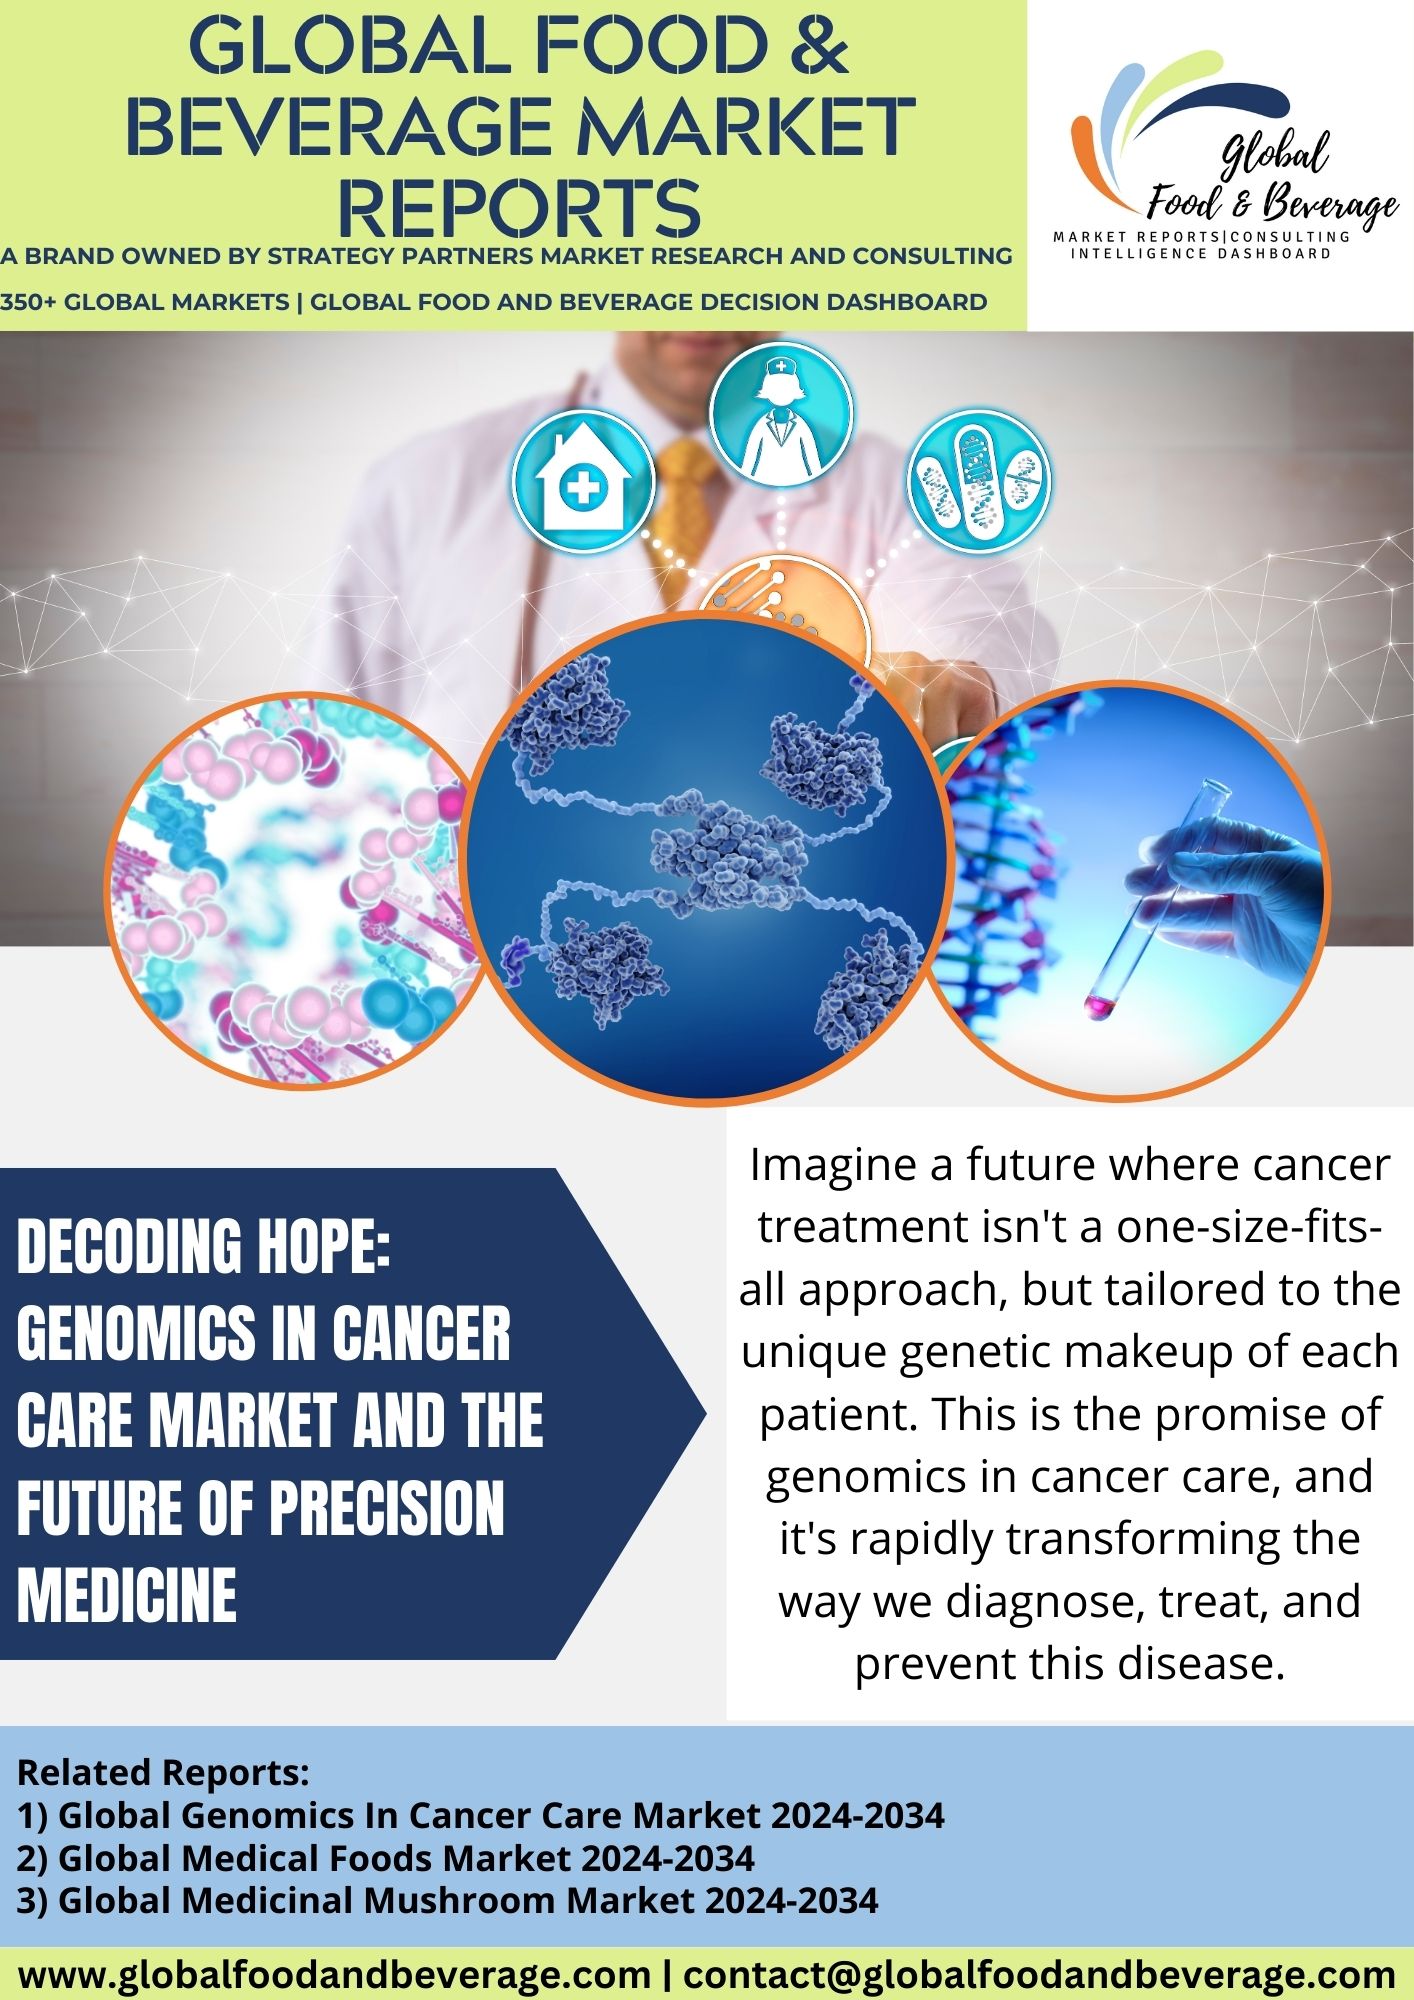 Decoding Hope: Genomics in Cancer Care Market and the Future of Precision Medicine